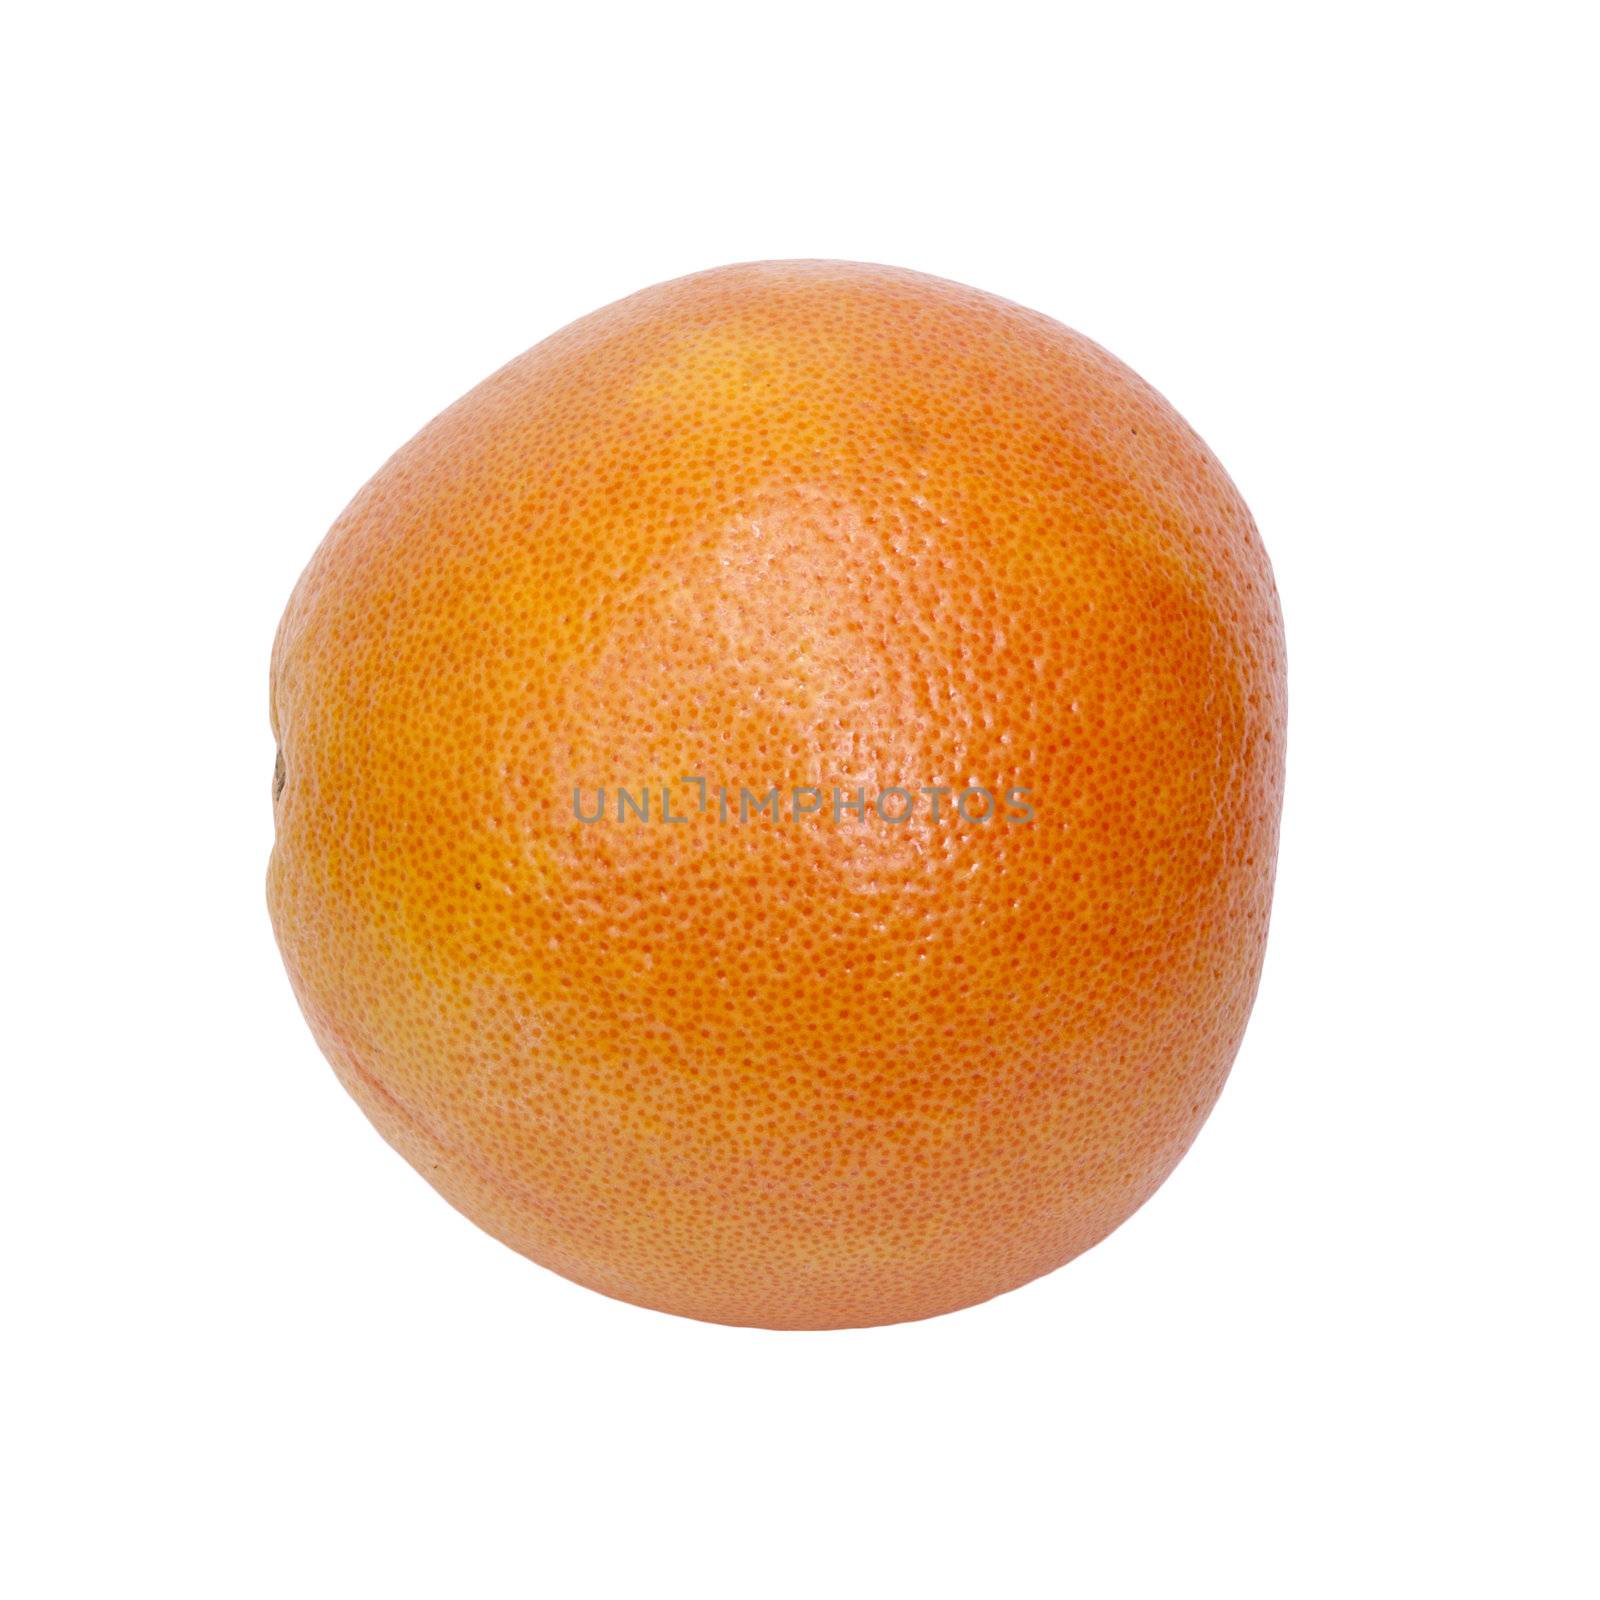 Grapefruit on a white background.  by schankz